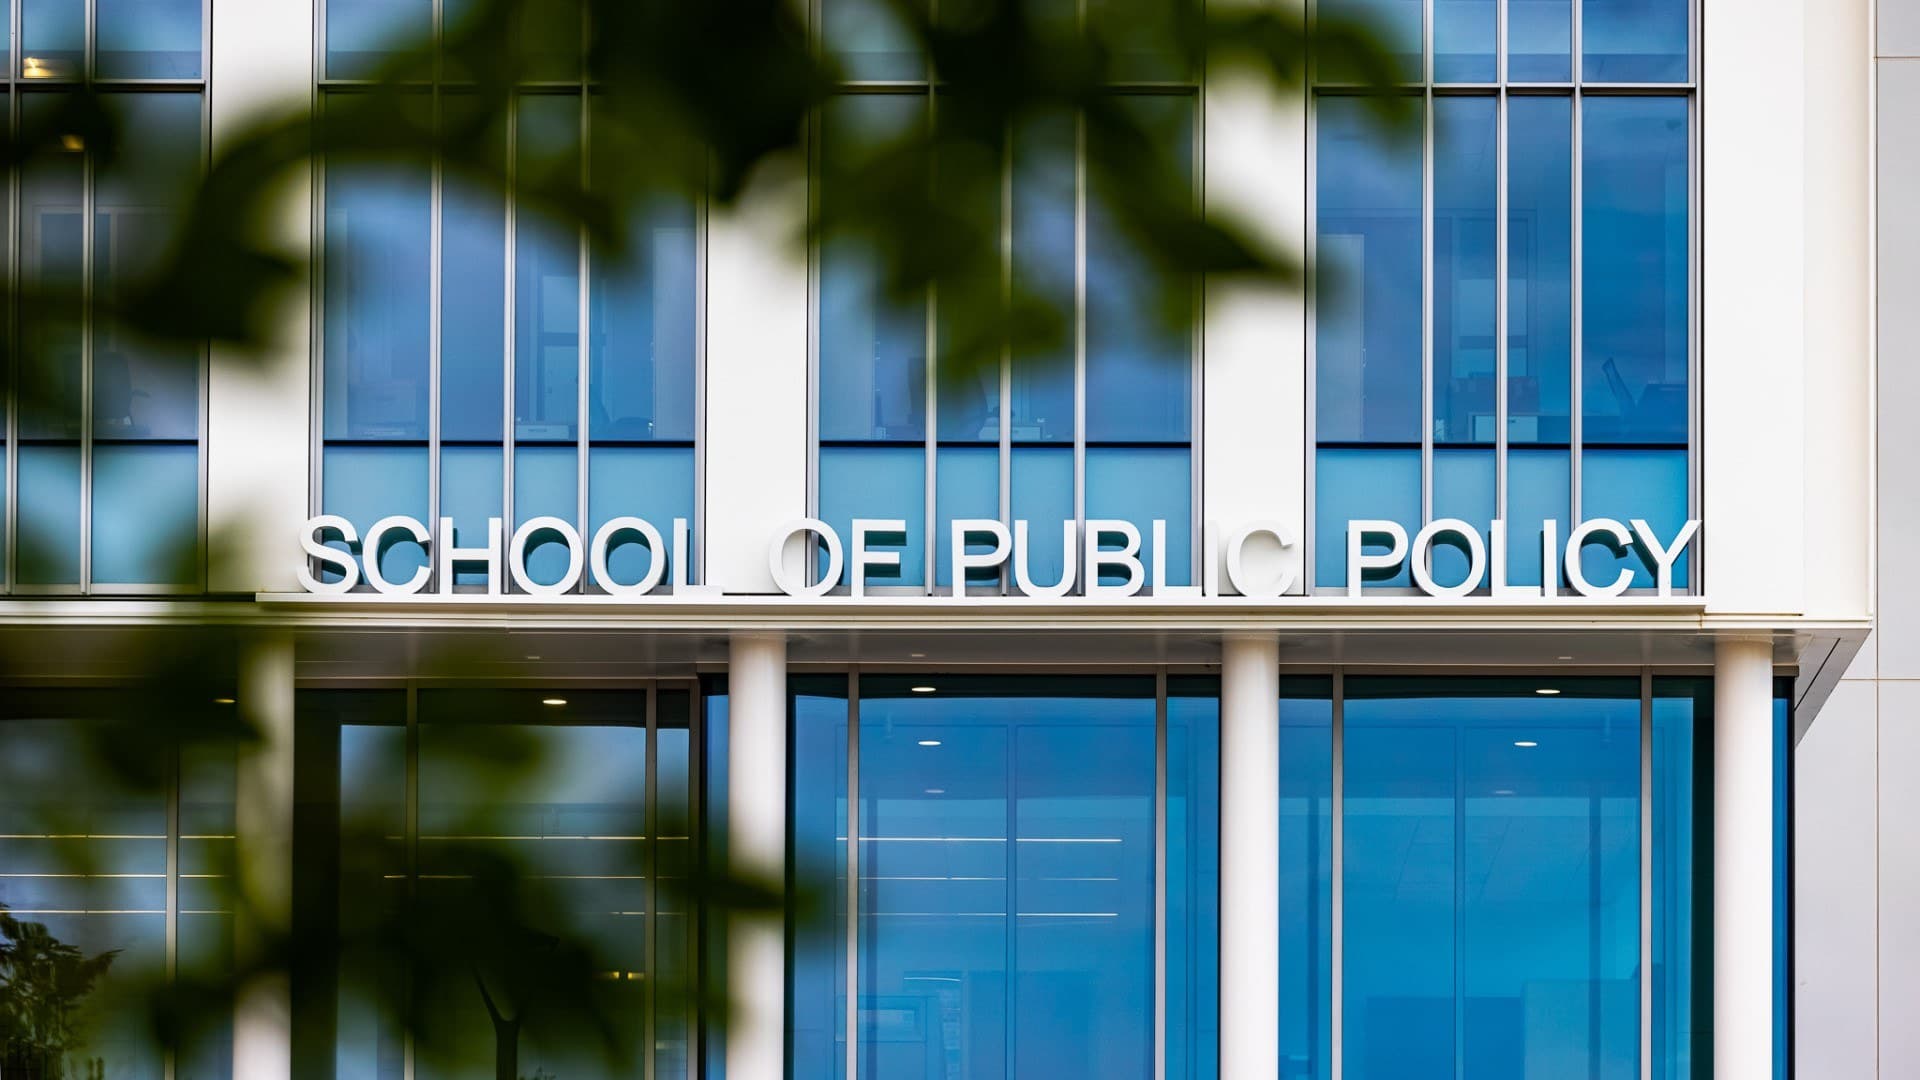 School of Public Policy